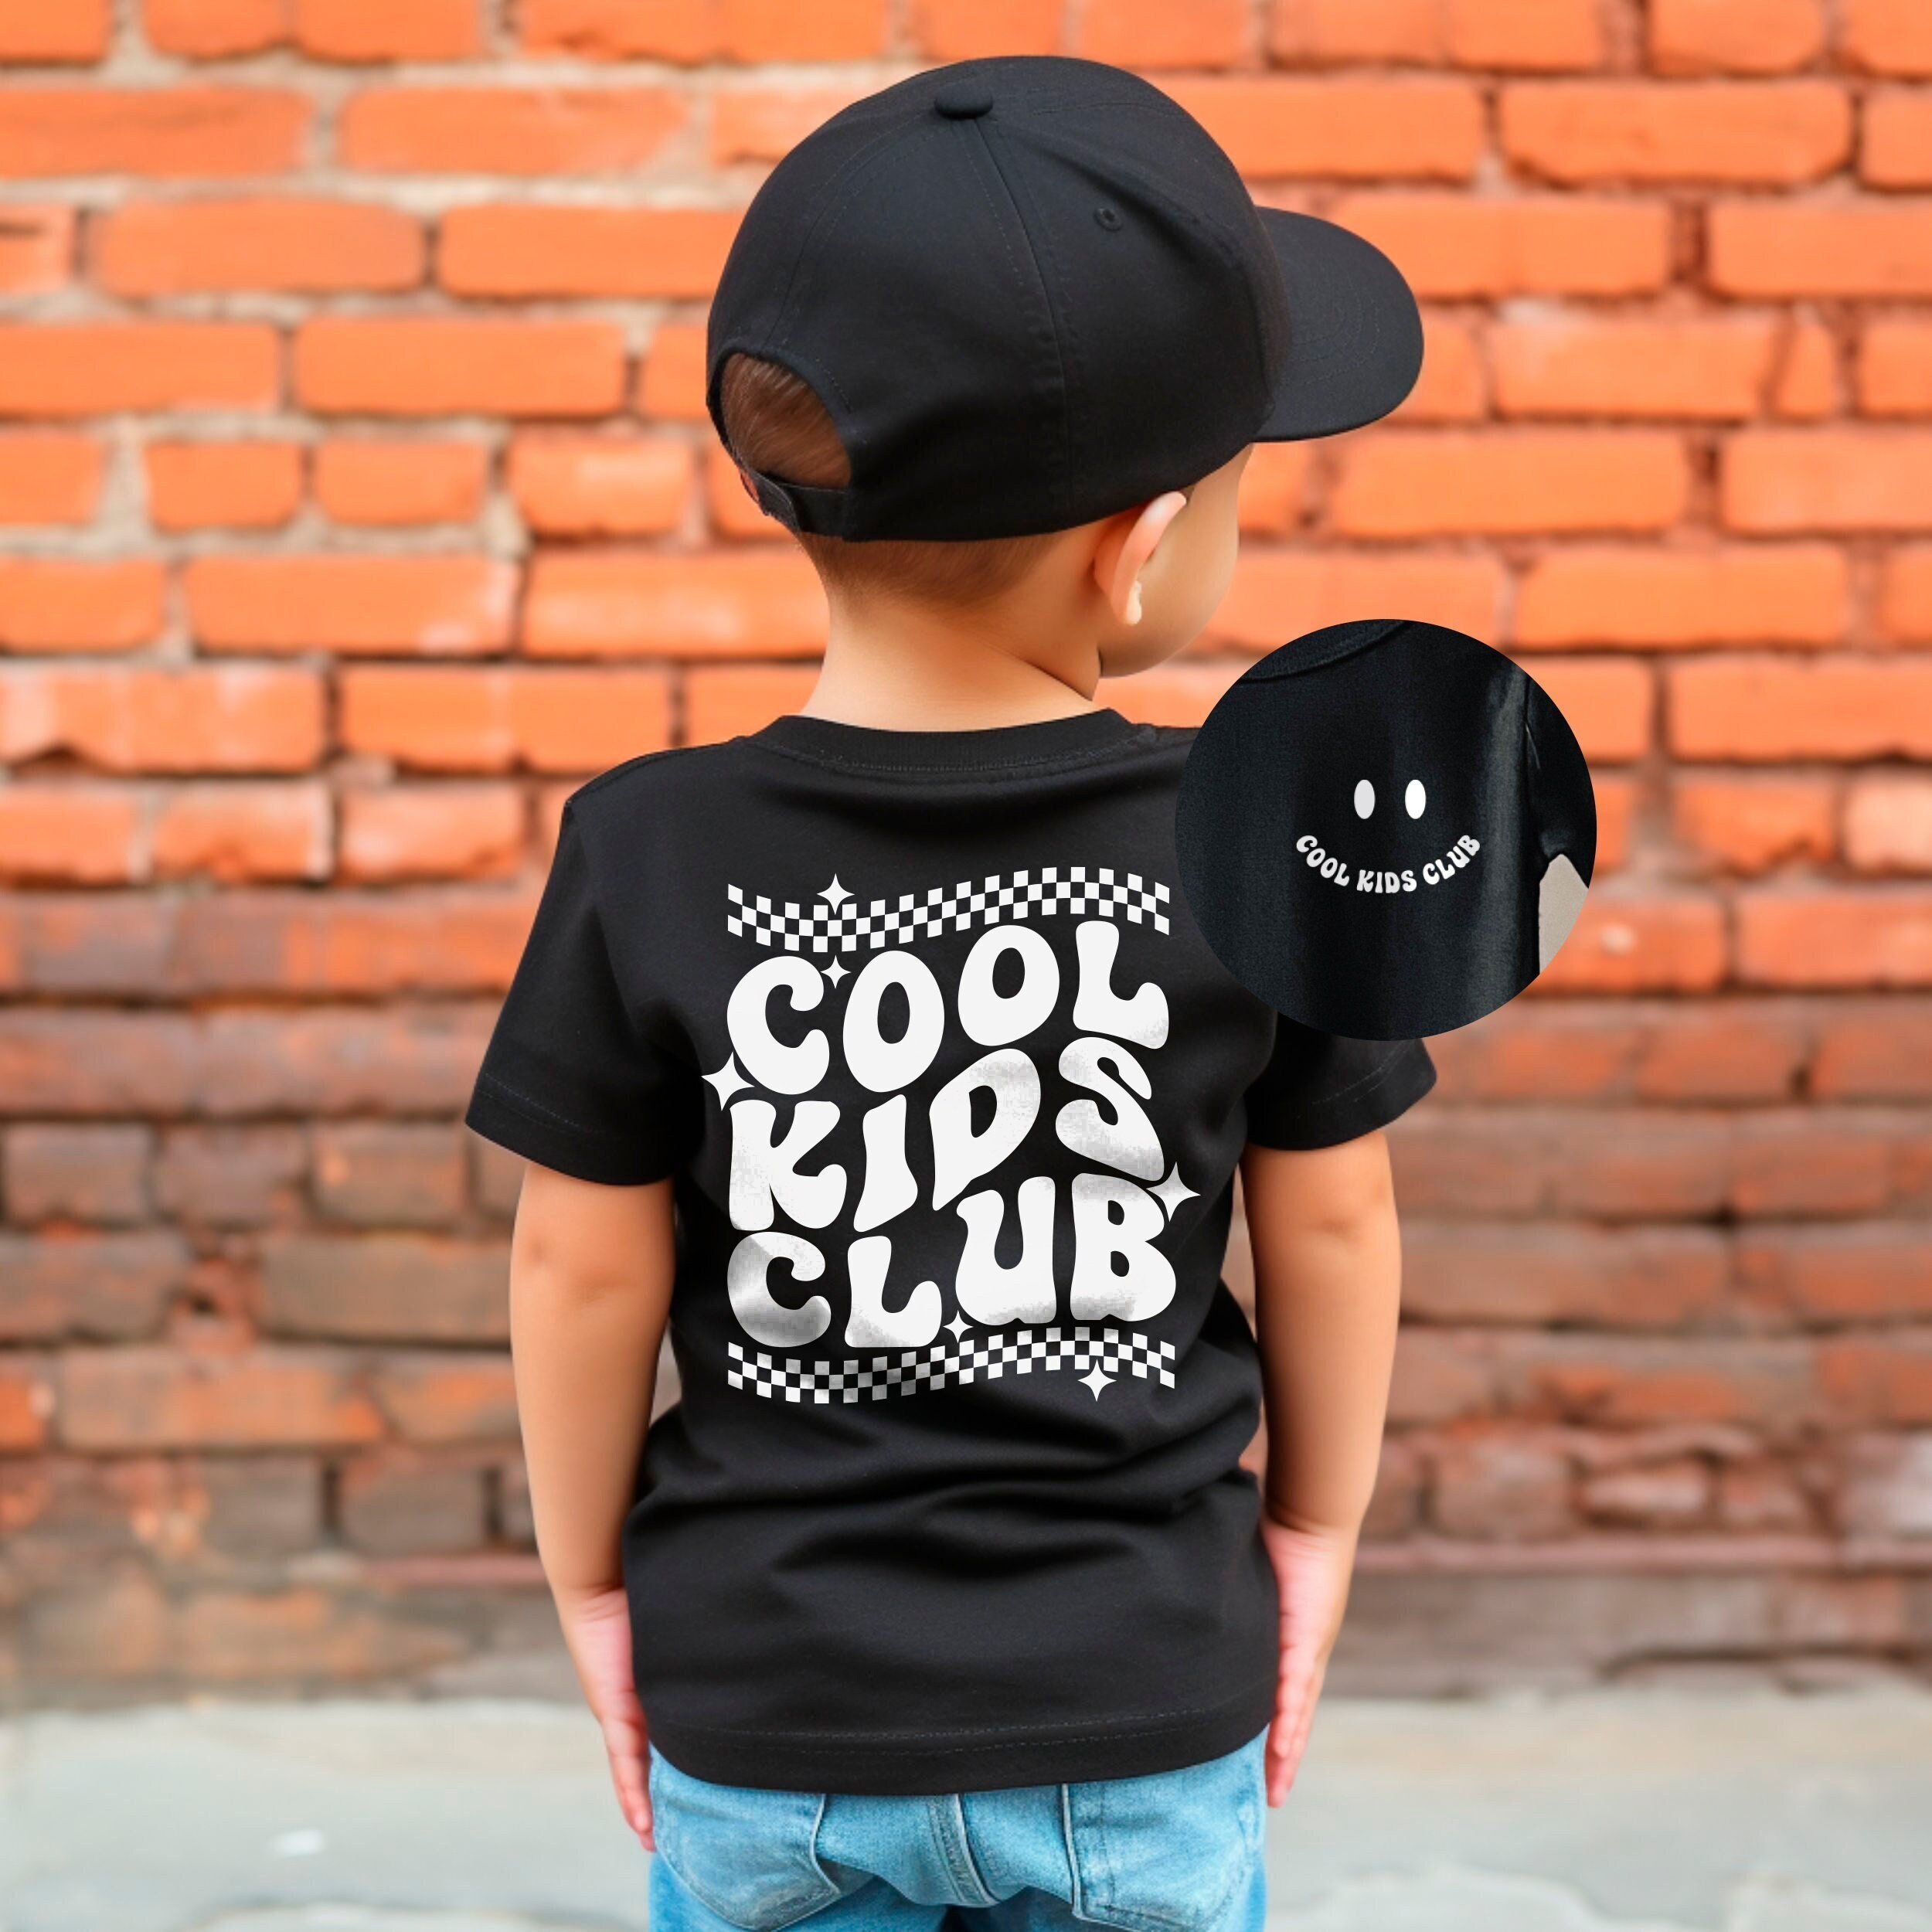 Shaddy Kids Club Shirt